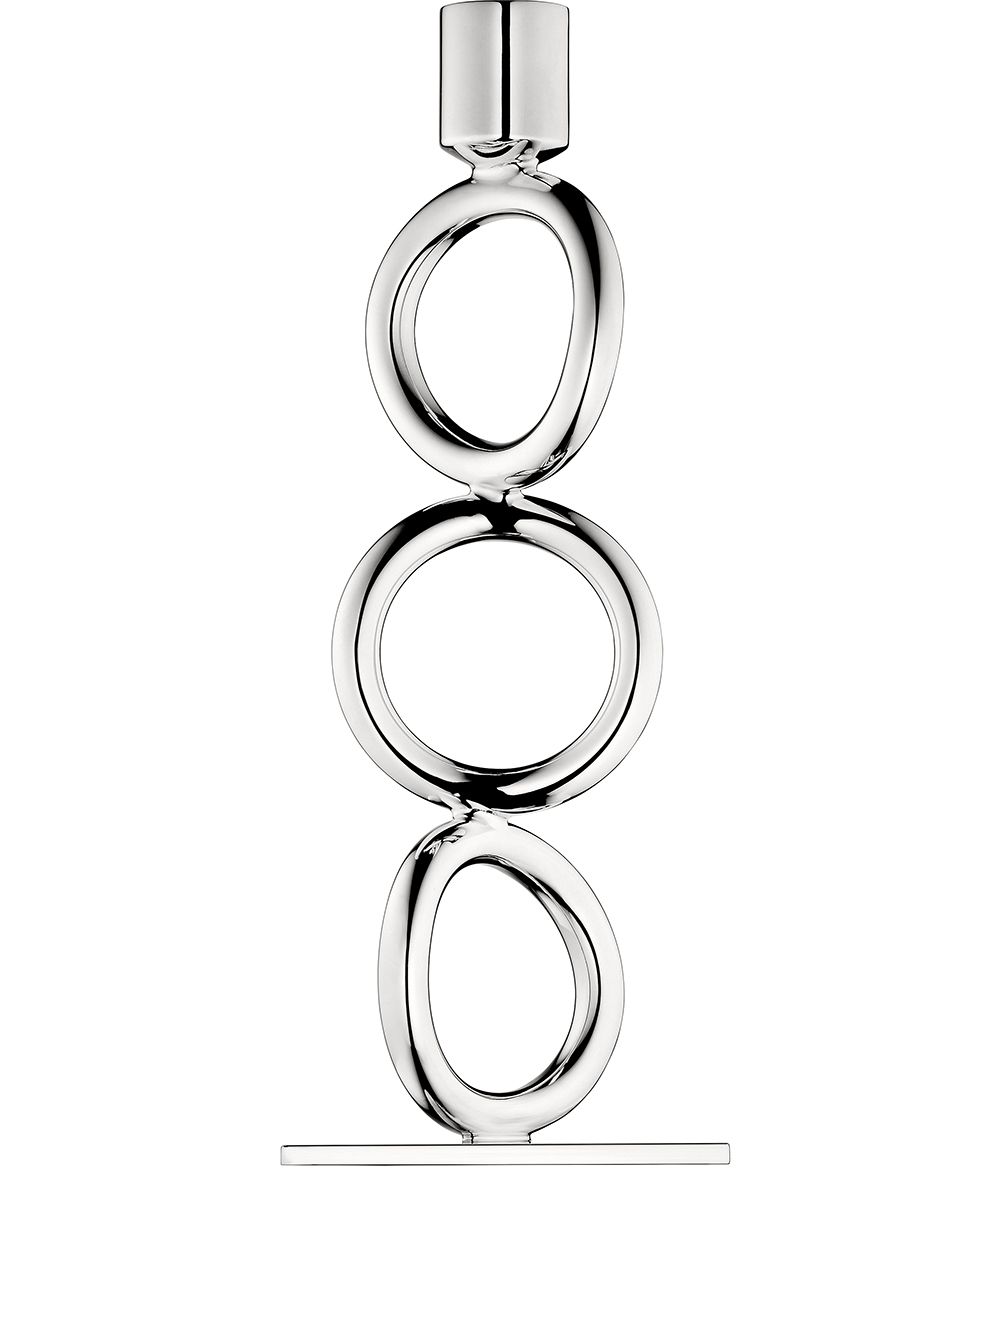 Christofle Vertigo silver-plated 3-ring candlestick von Christofle